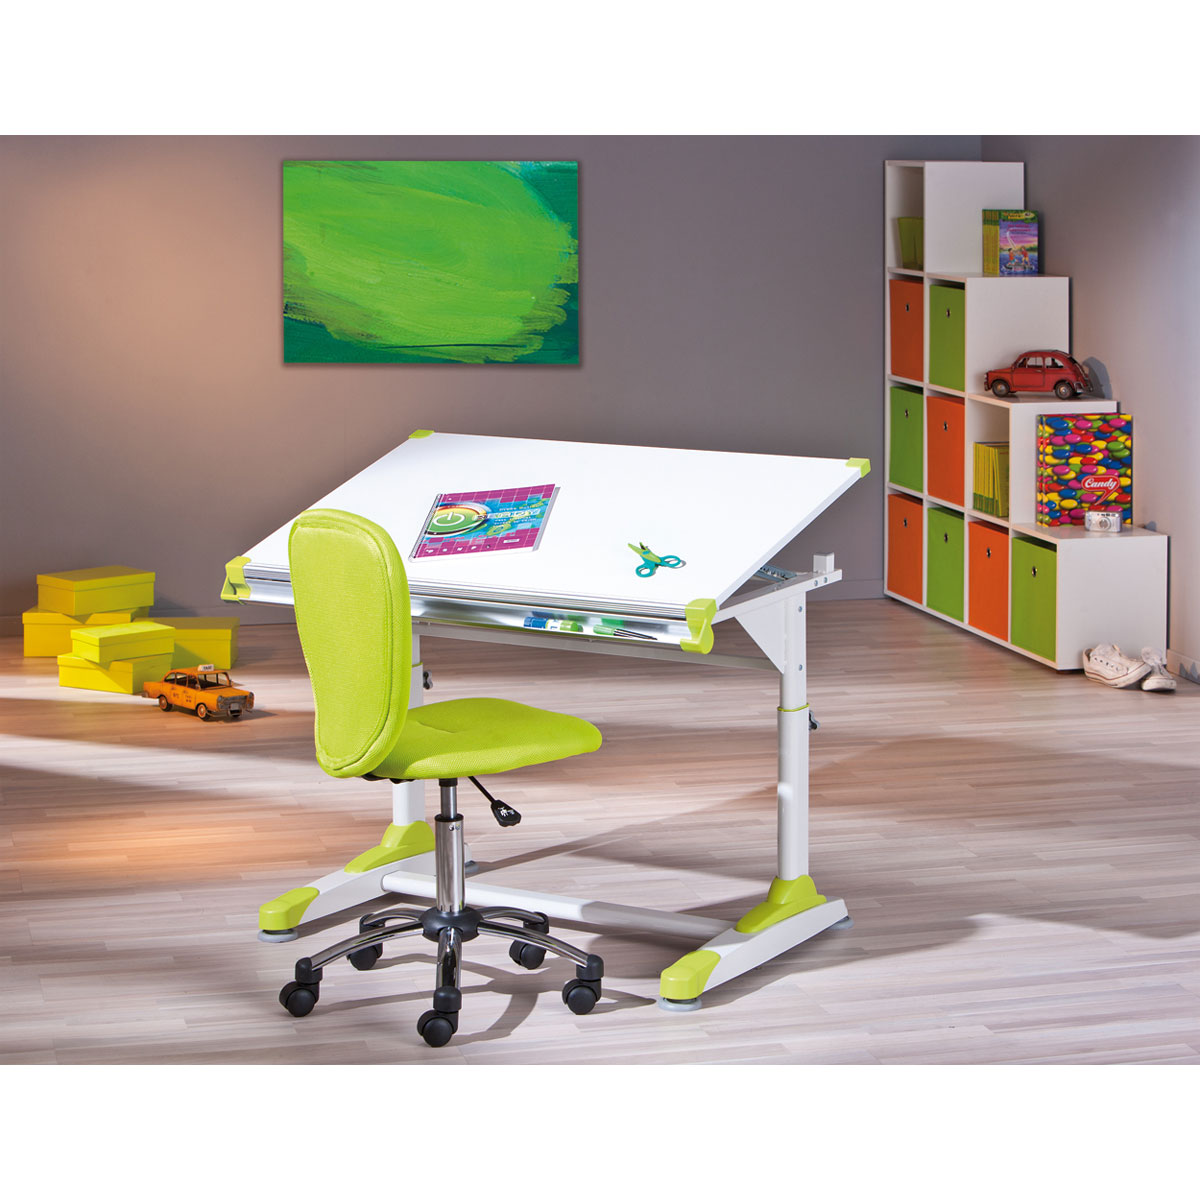 Inter Link Schüler-Schreibtisch 2 Colorido weiß Pink-Grün 100 x 84 x 55 cm  | K000031454